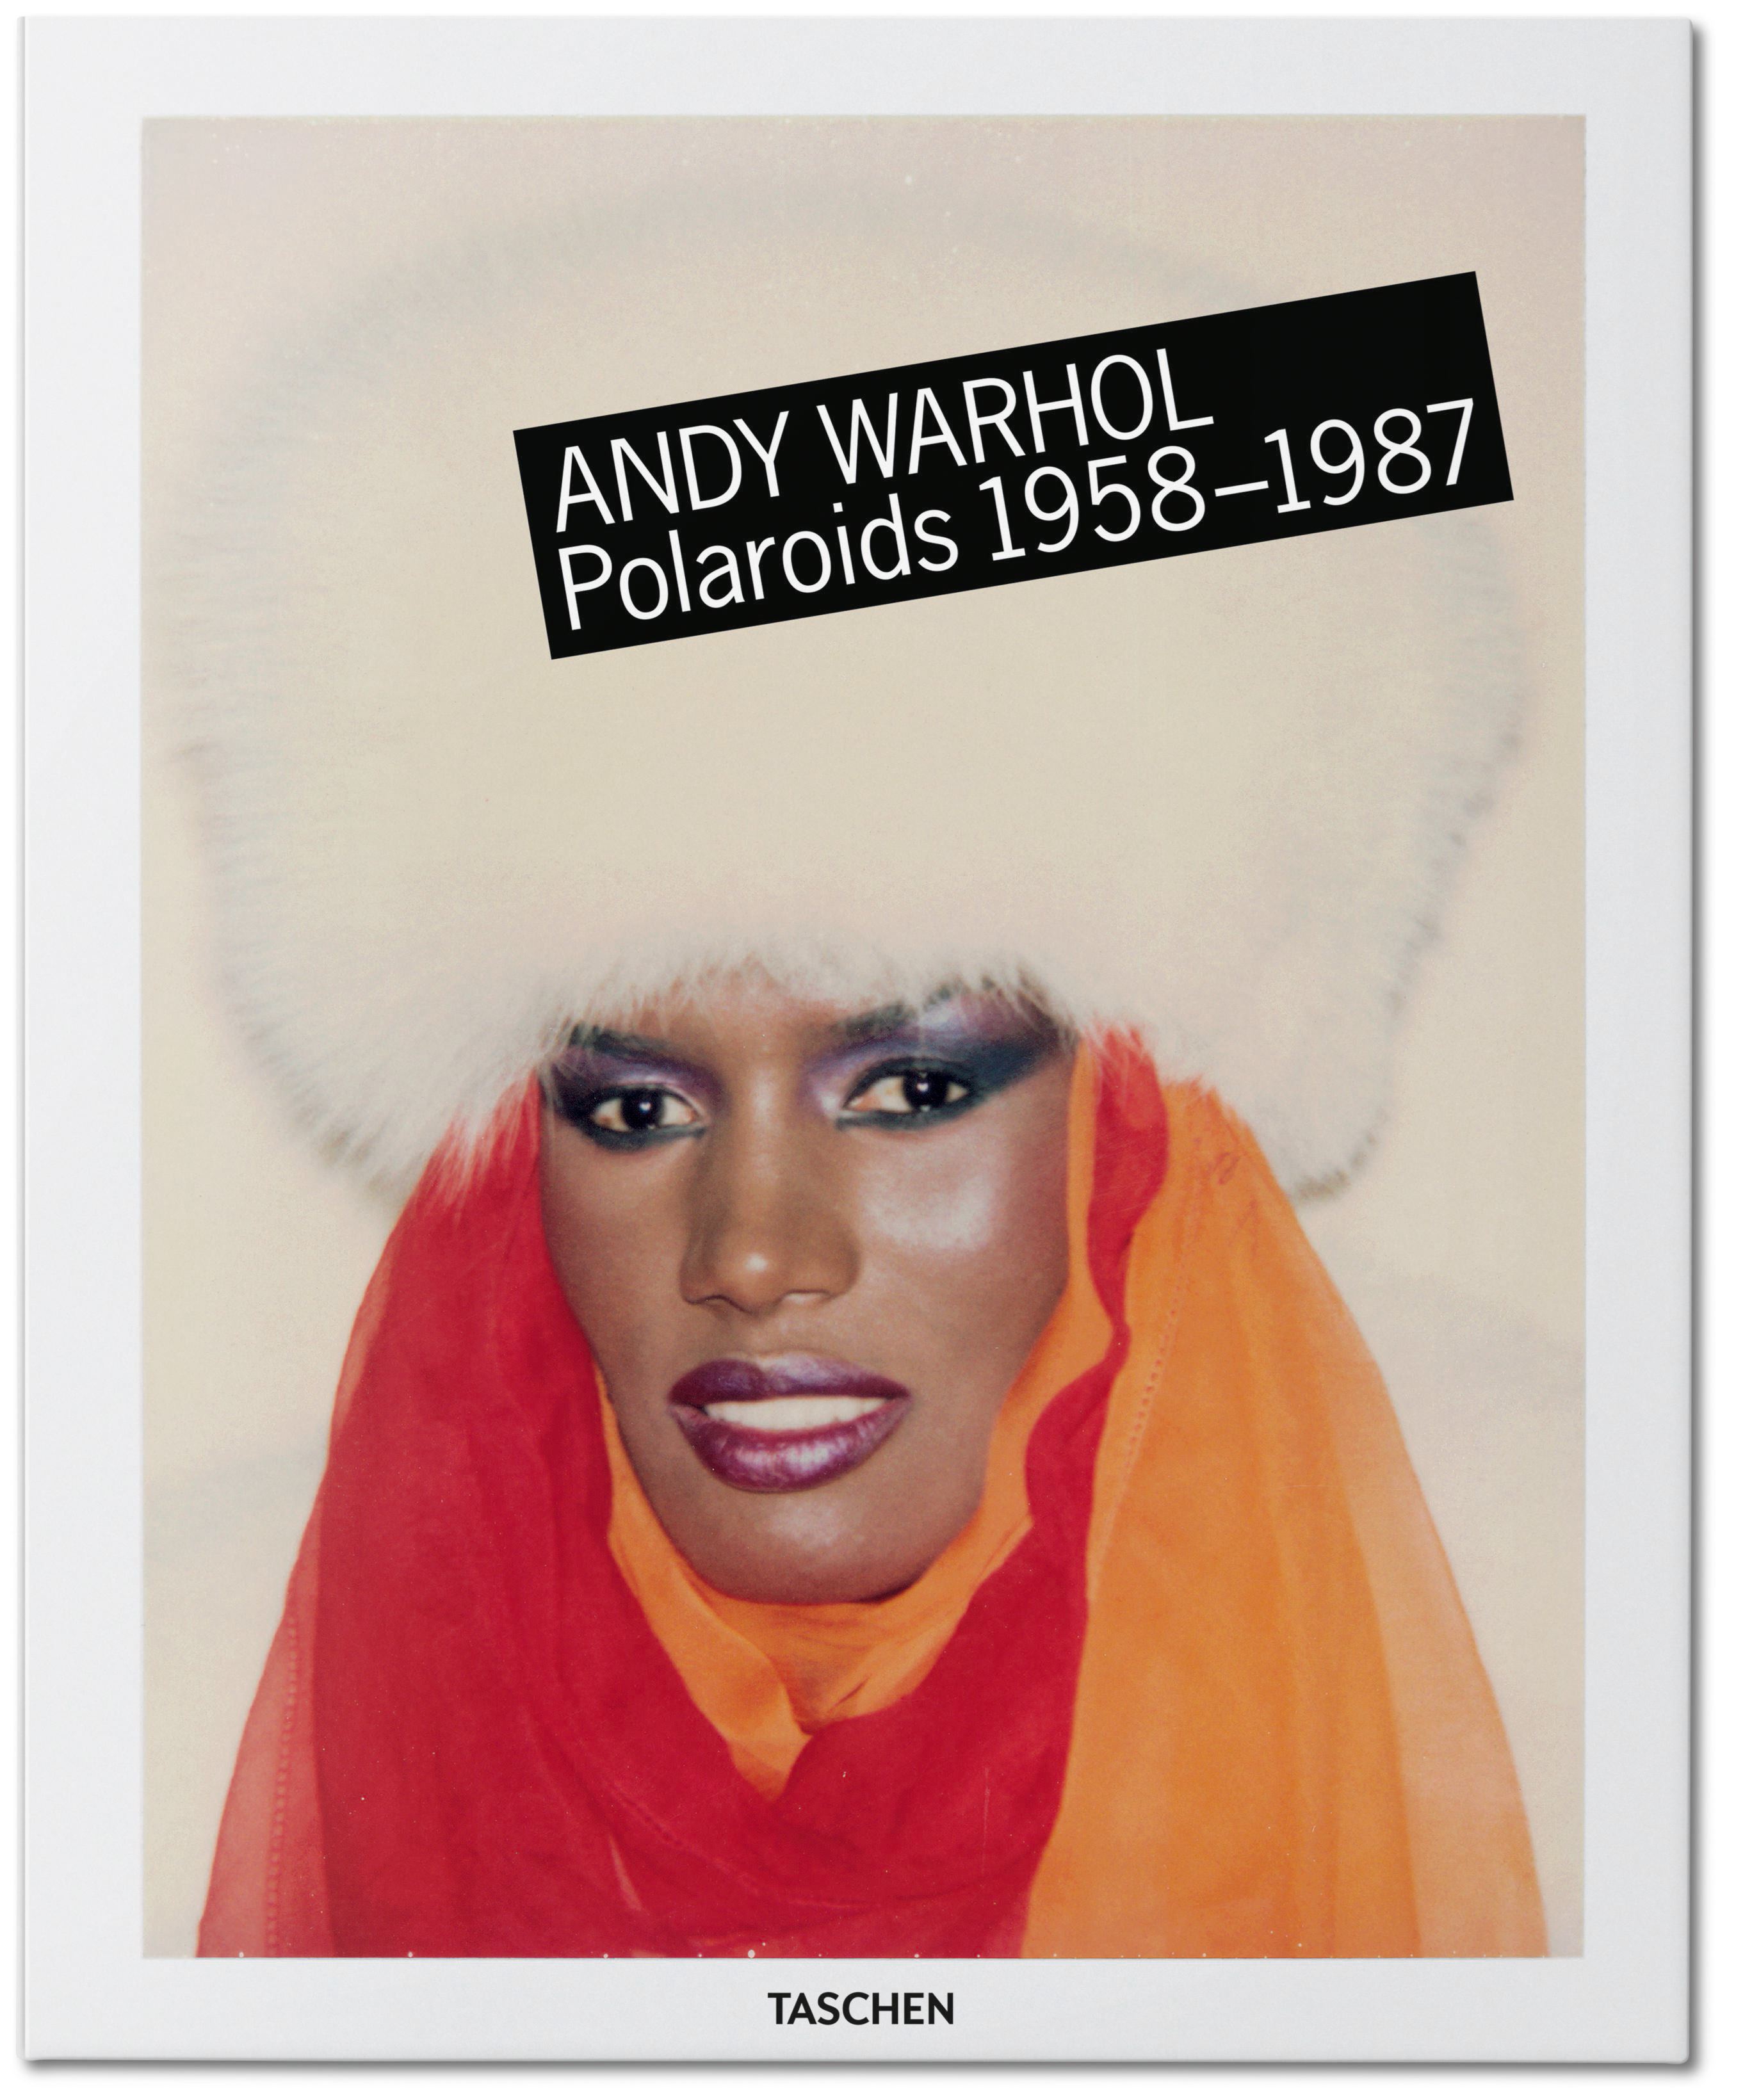 ANDY WARHOL: POLAROIDS 1958-1987